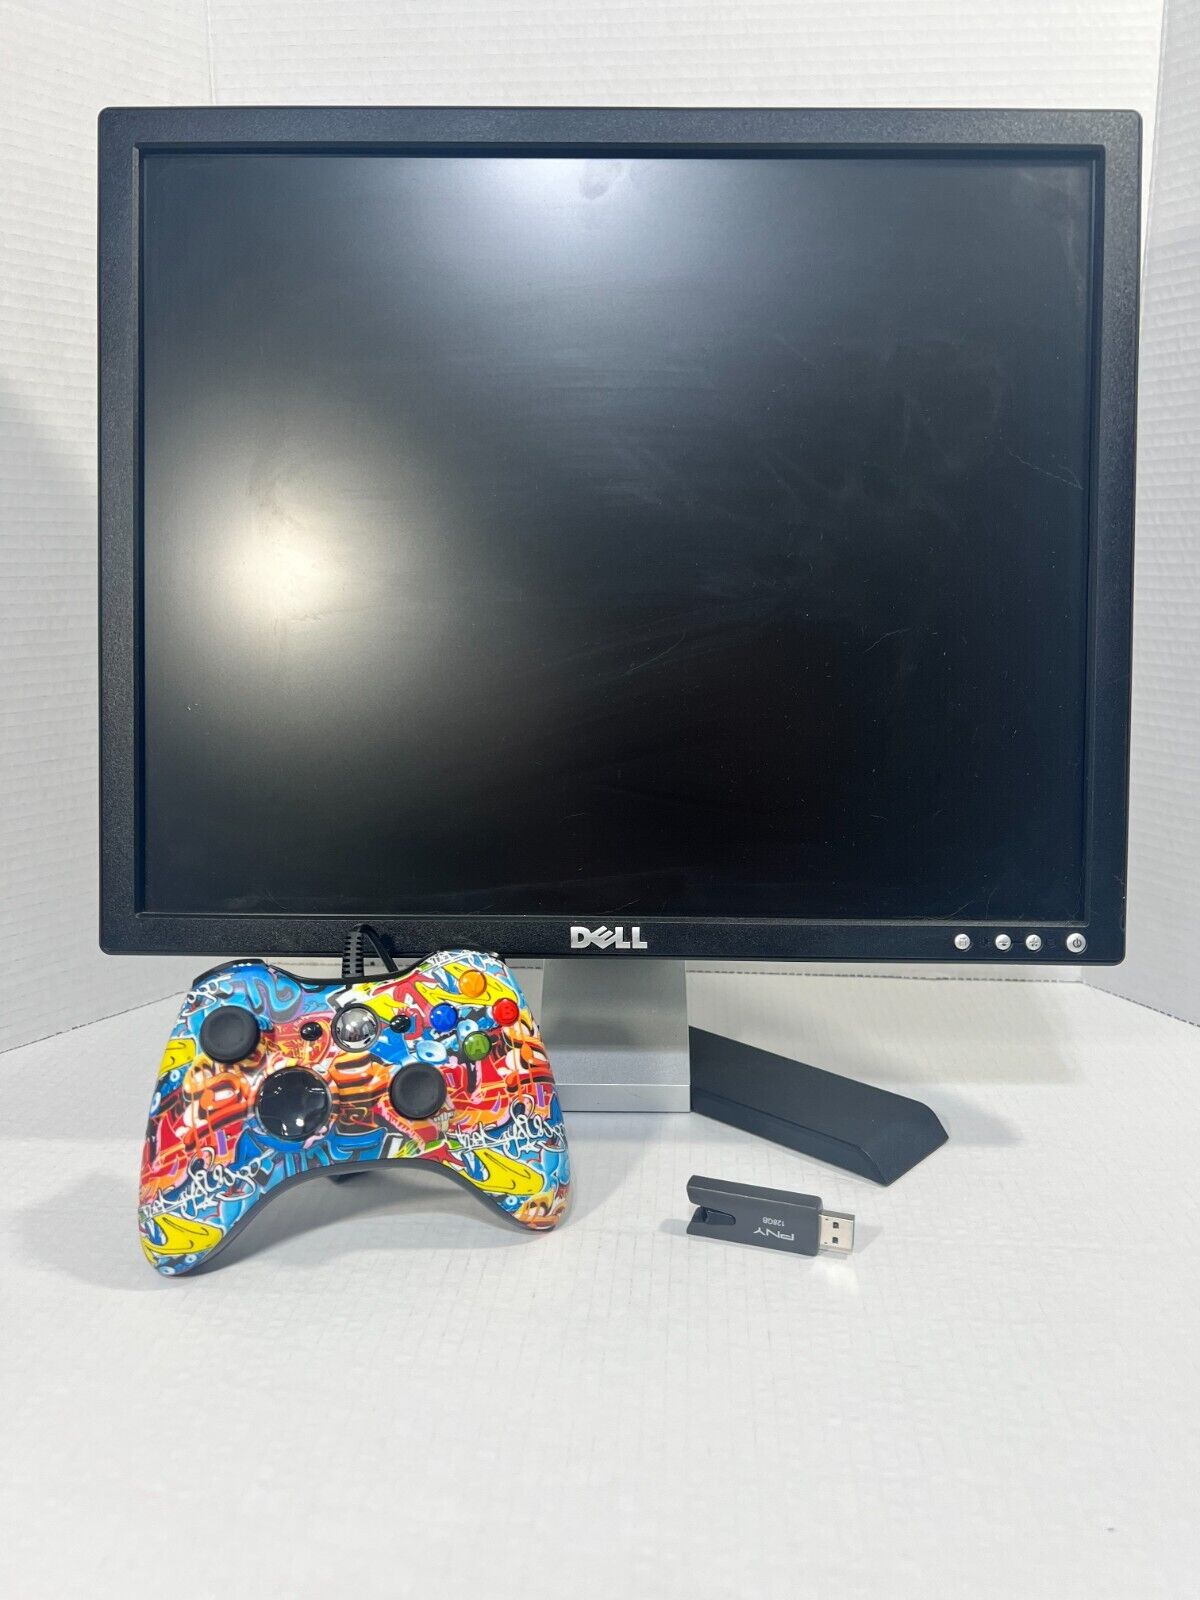 17 inch Dell 4:3 Retro Gaming Monitor with EXTRAS- Controller + 128GB Batocera